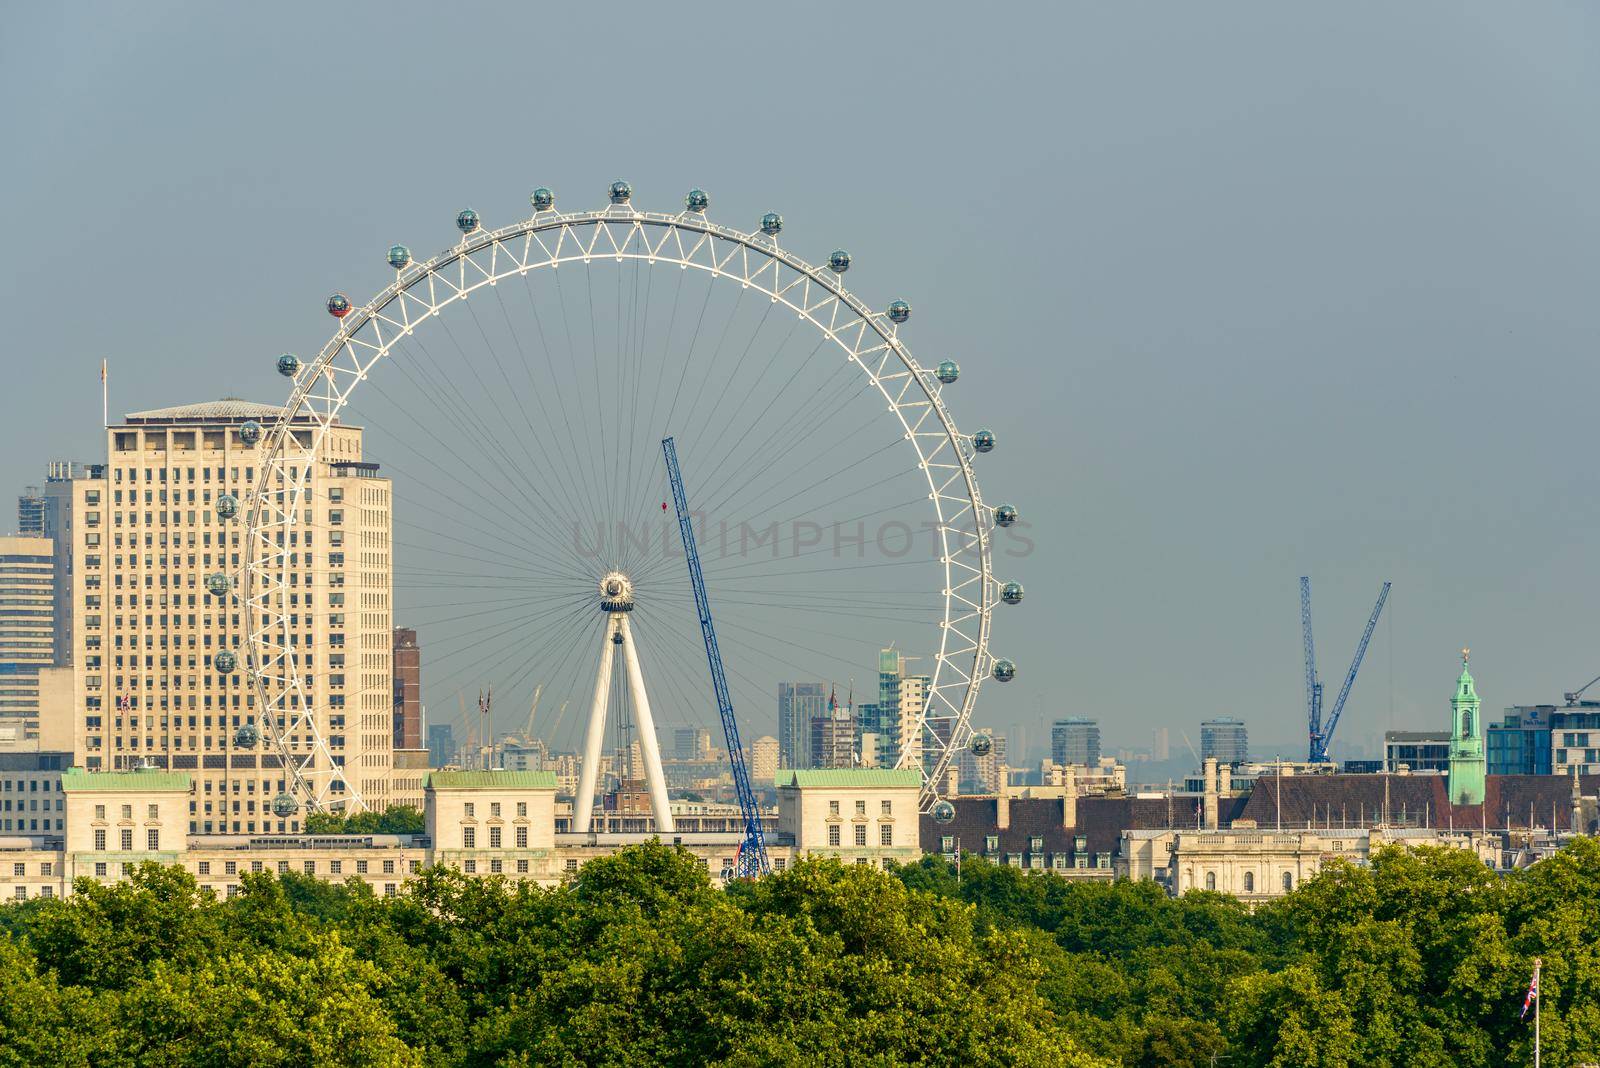 The London Eye in London, UK by dutourdumonde